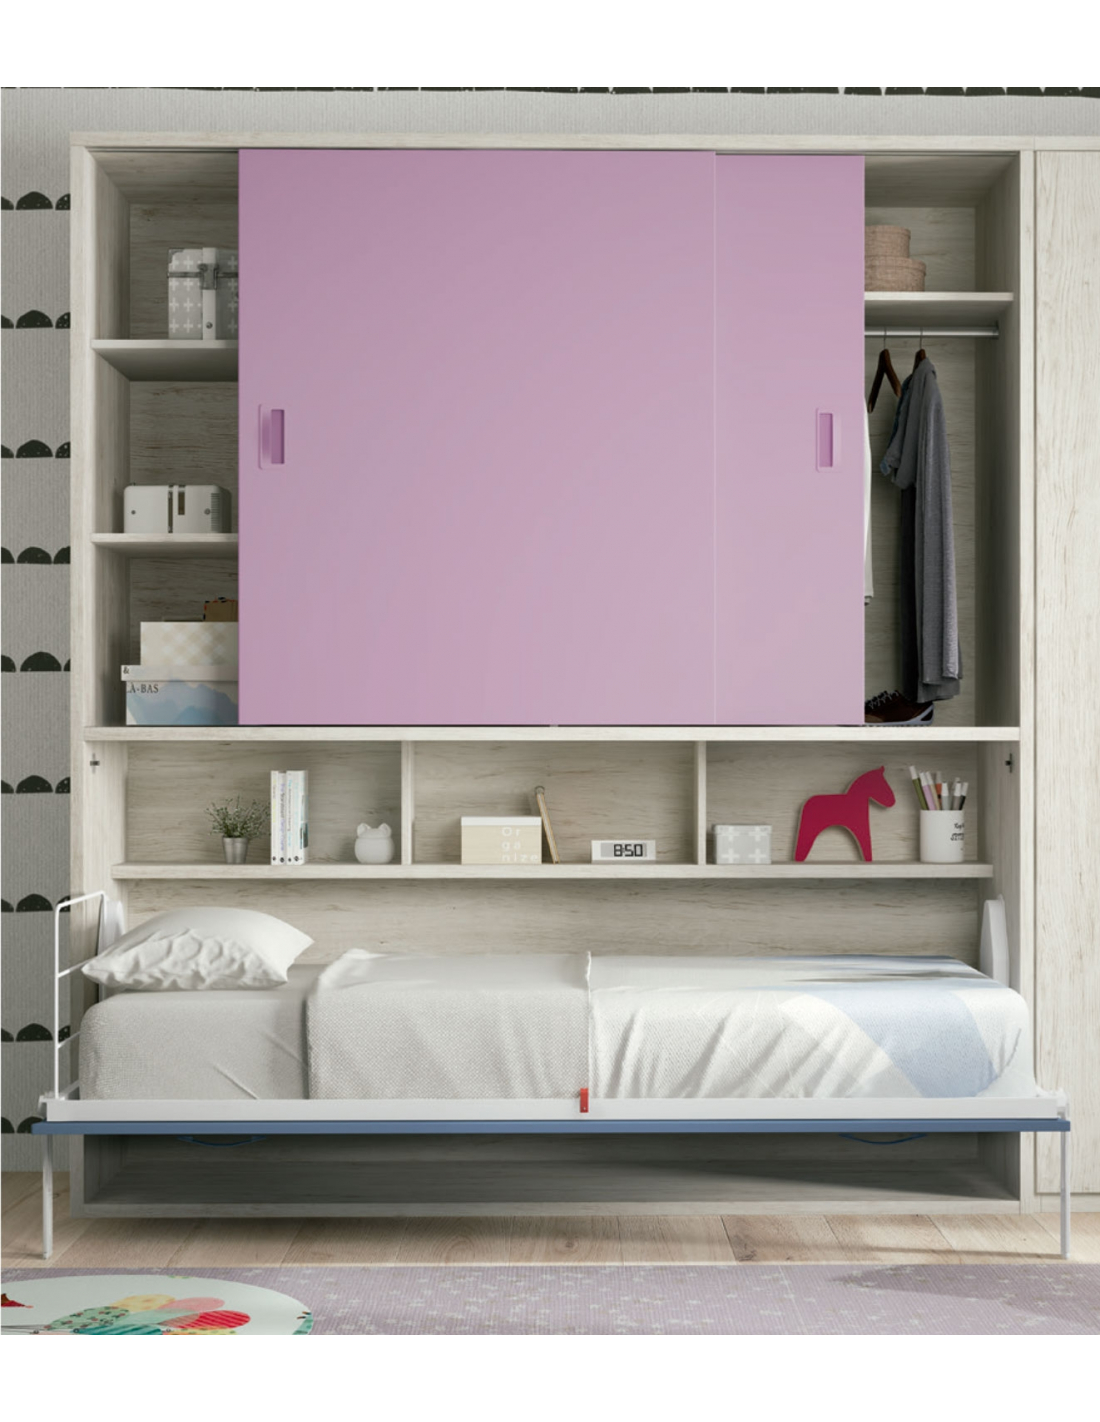 Composición habitacion cama abatible vertical con armarios